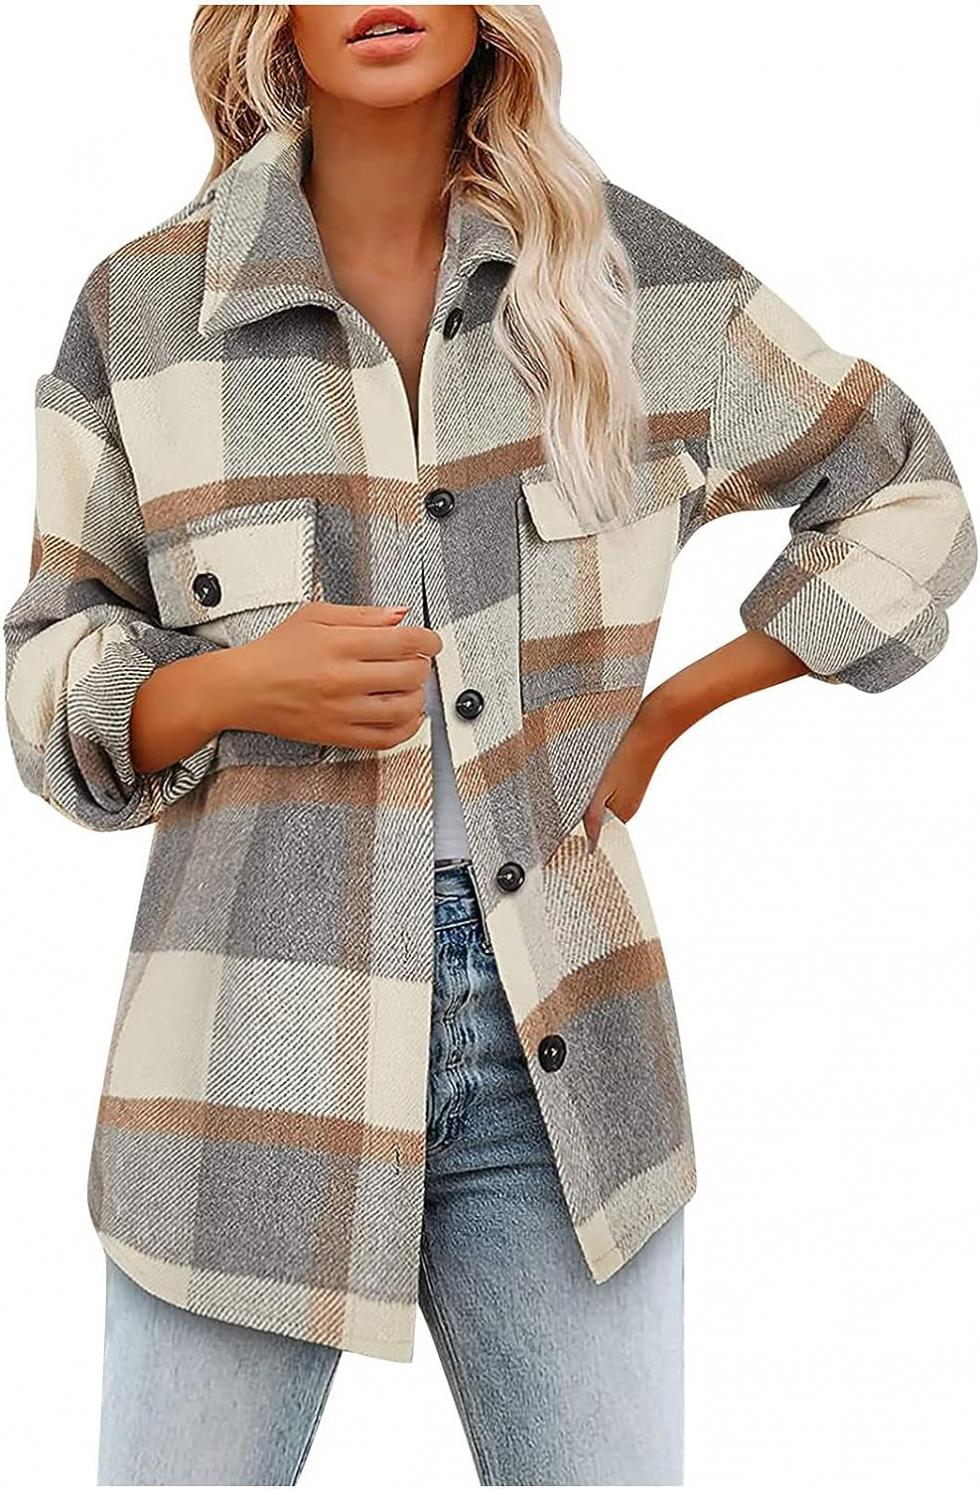 ZCVBOCZ Shacket Jacket Women Casual Plaid Wool Blend Long Sleeve Coat Button Down Pockets Flannel Lapel Jacket